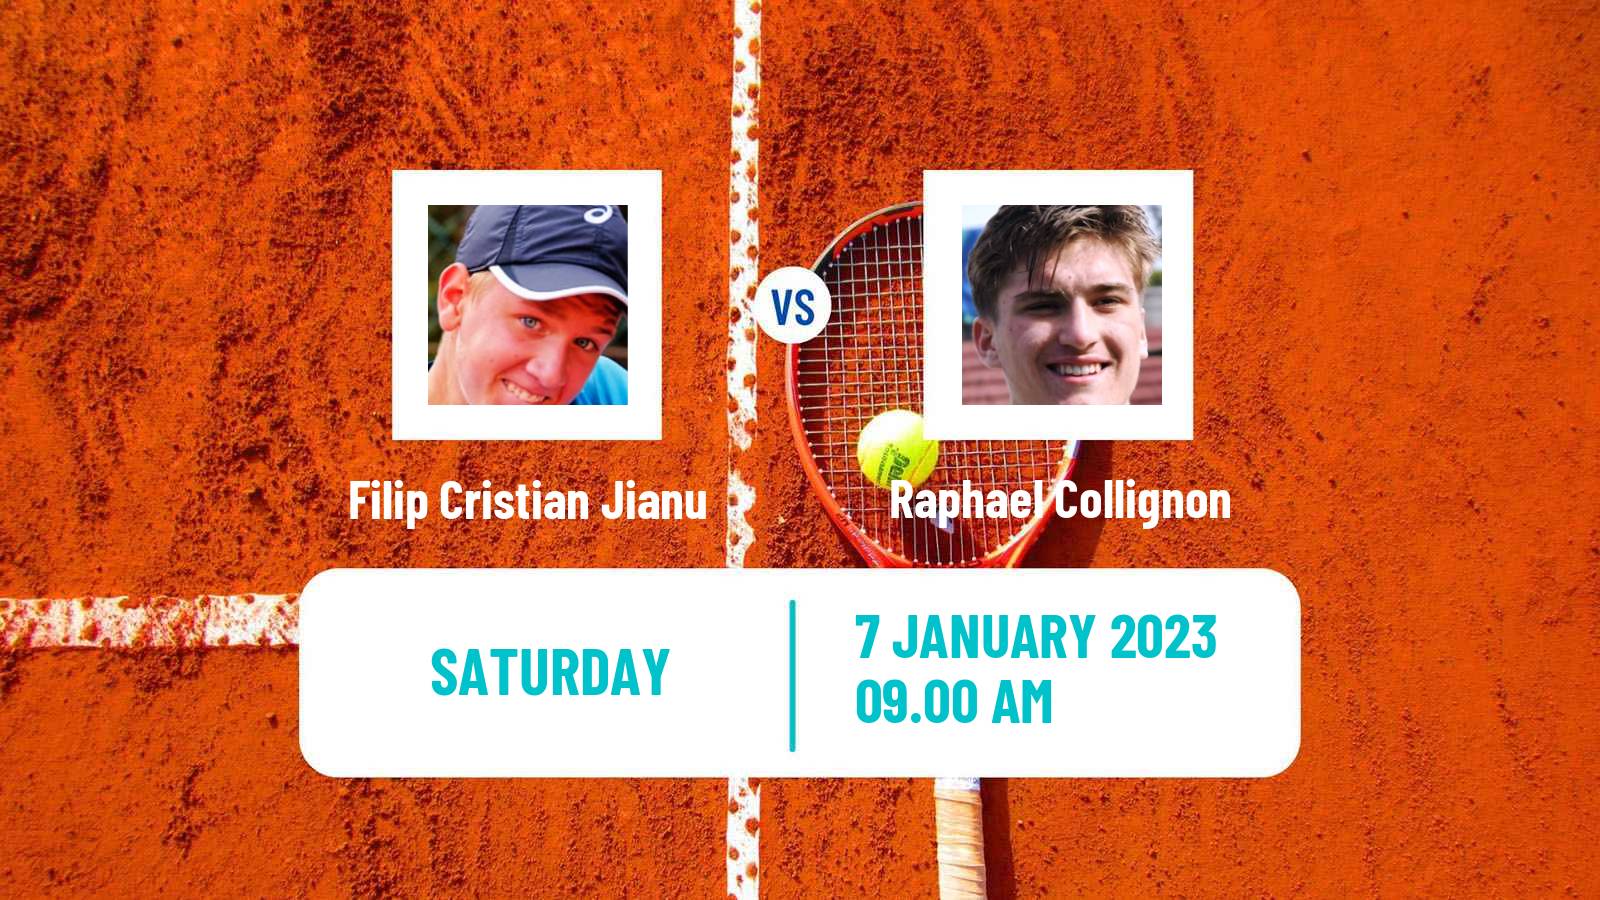 Tennis ATP Challenger Filip Cristian Jianu - Raphael Collignon